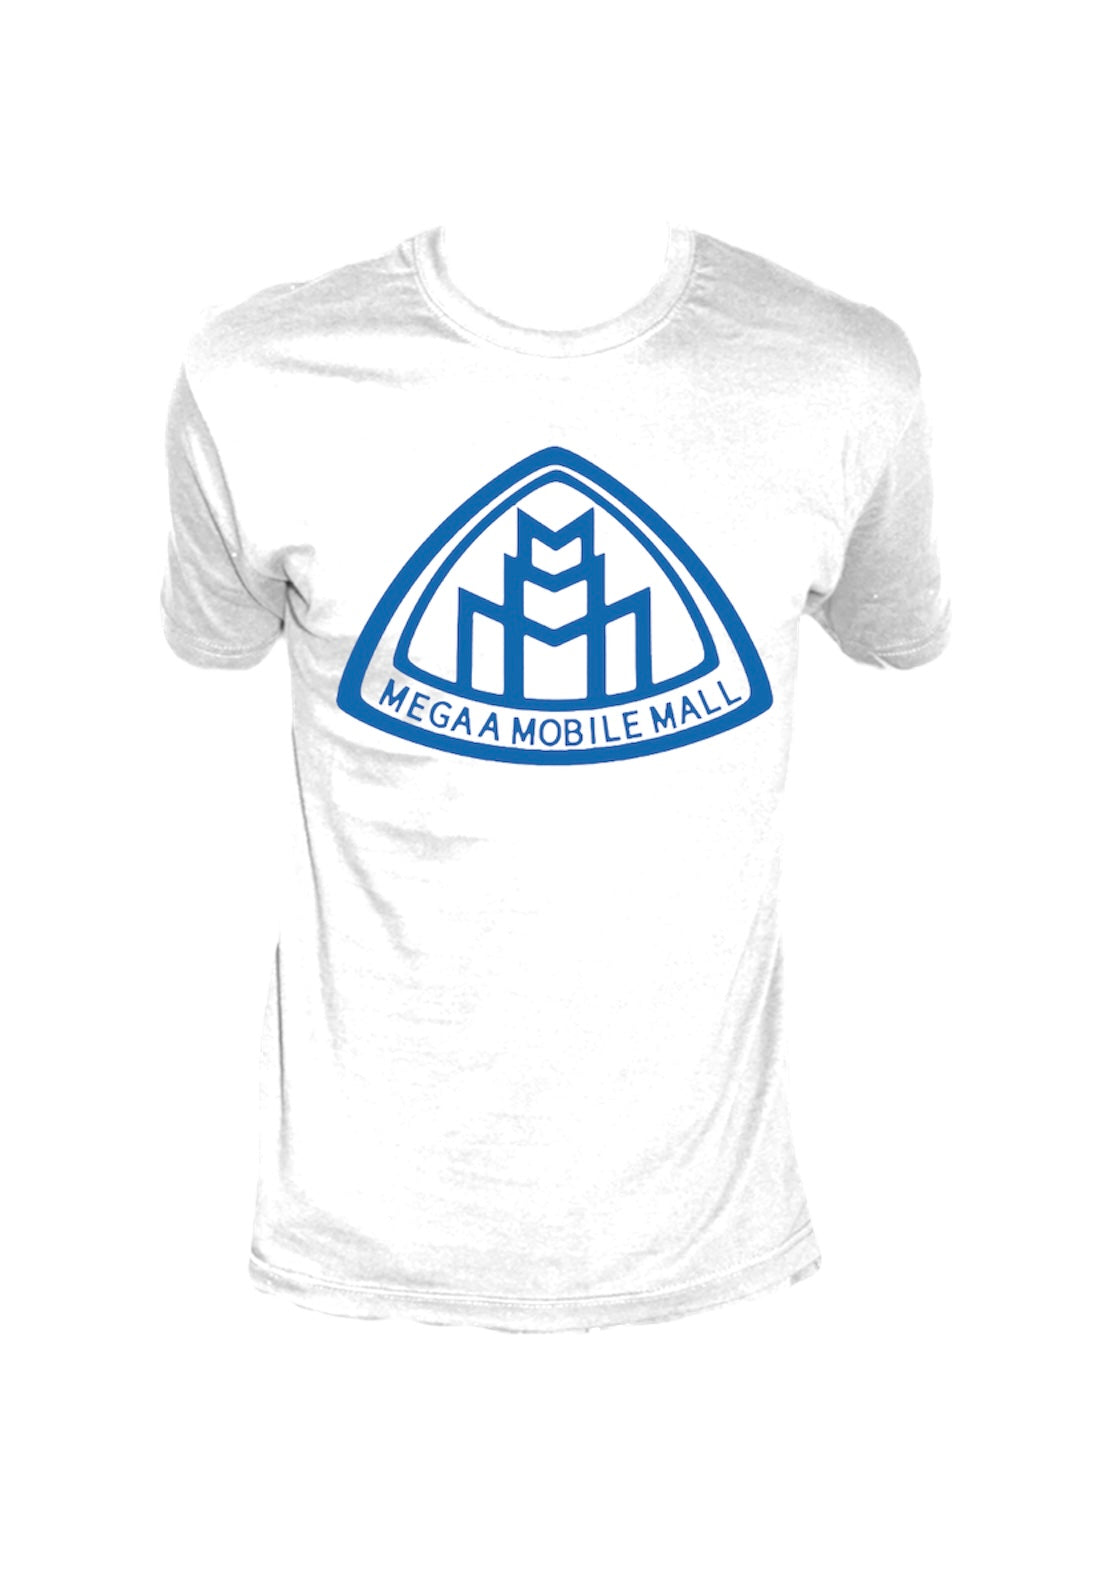 megaamobilemall Logo Shirt blue logo